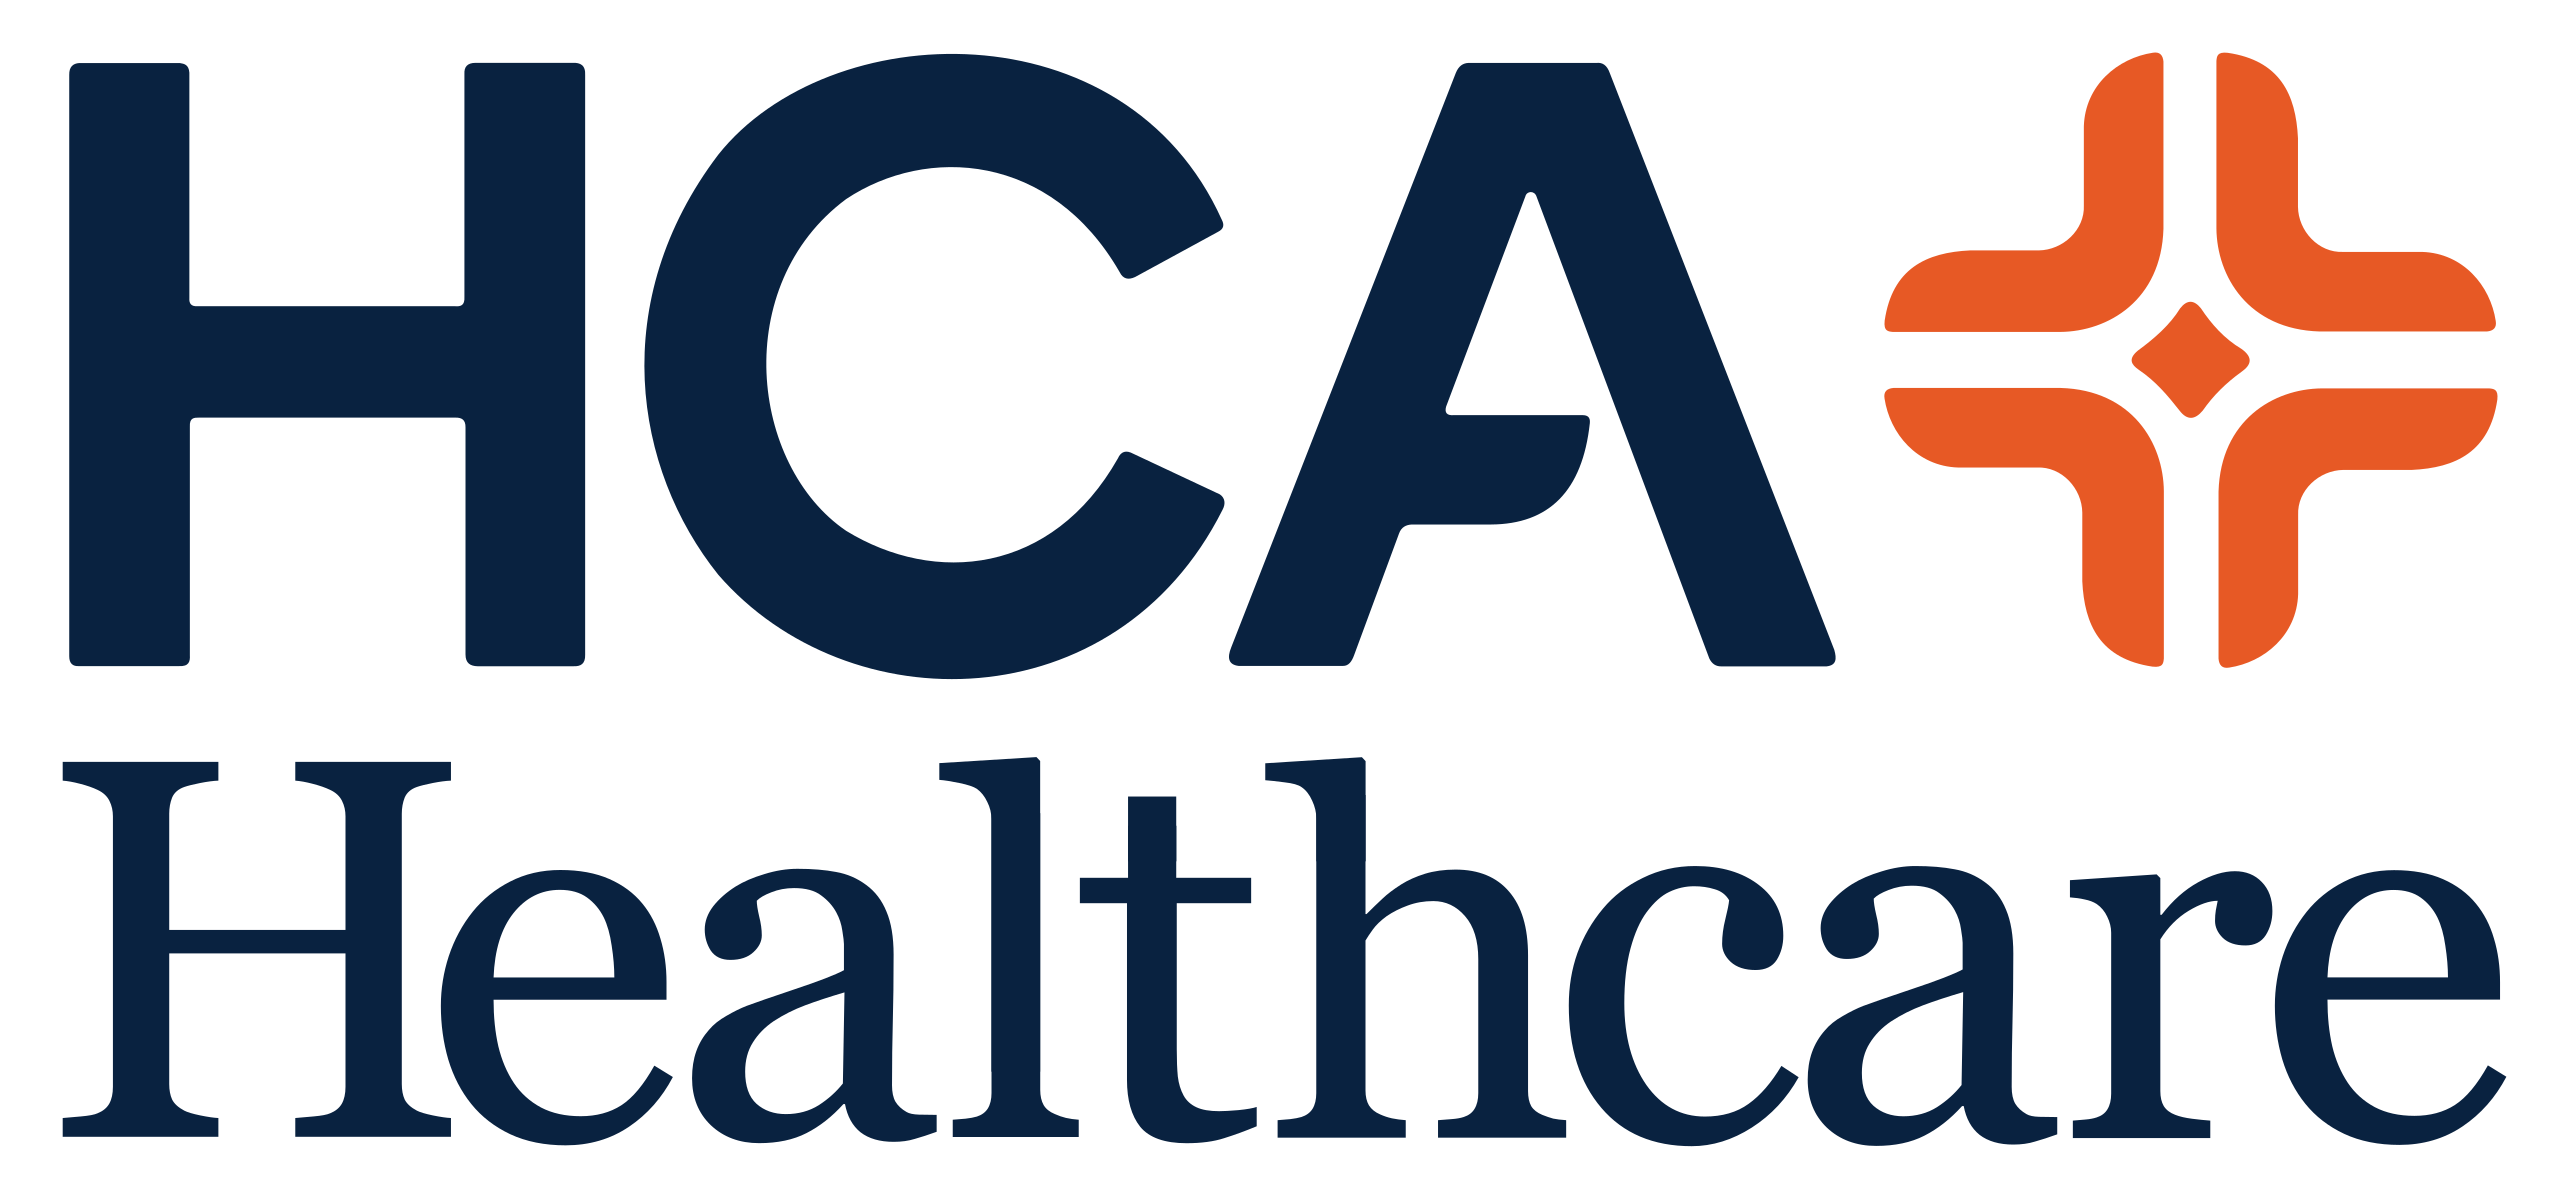 2019_HCA_logo.svg